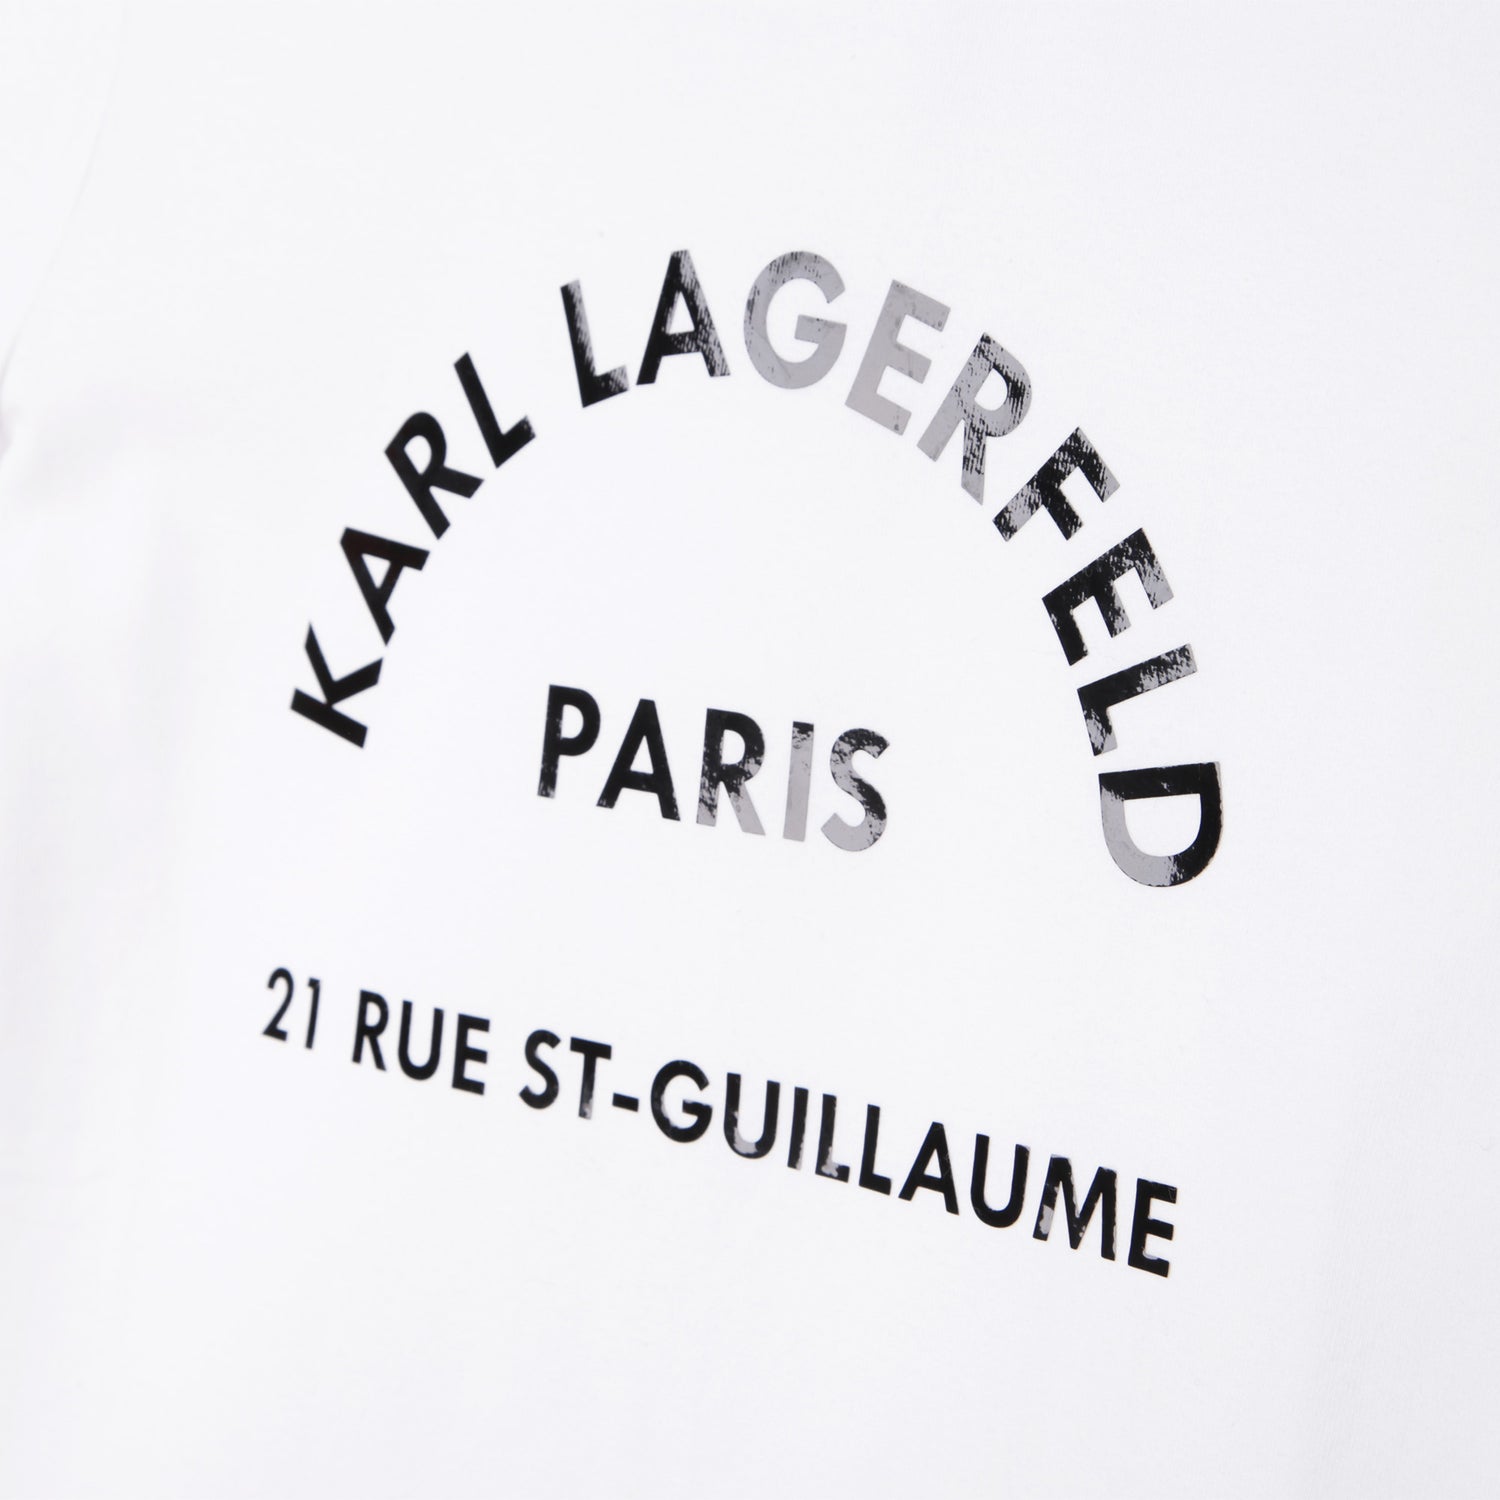 Karl Lagerfeld Kids Short Sleeves Tee-Shirt Style: Z15412